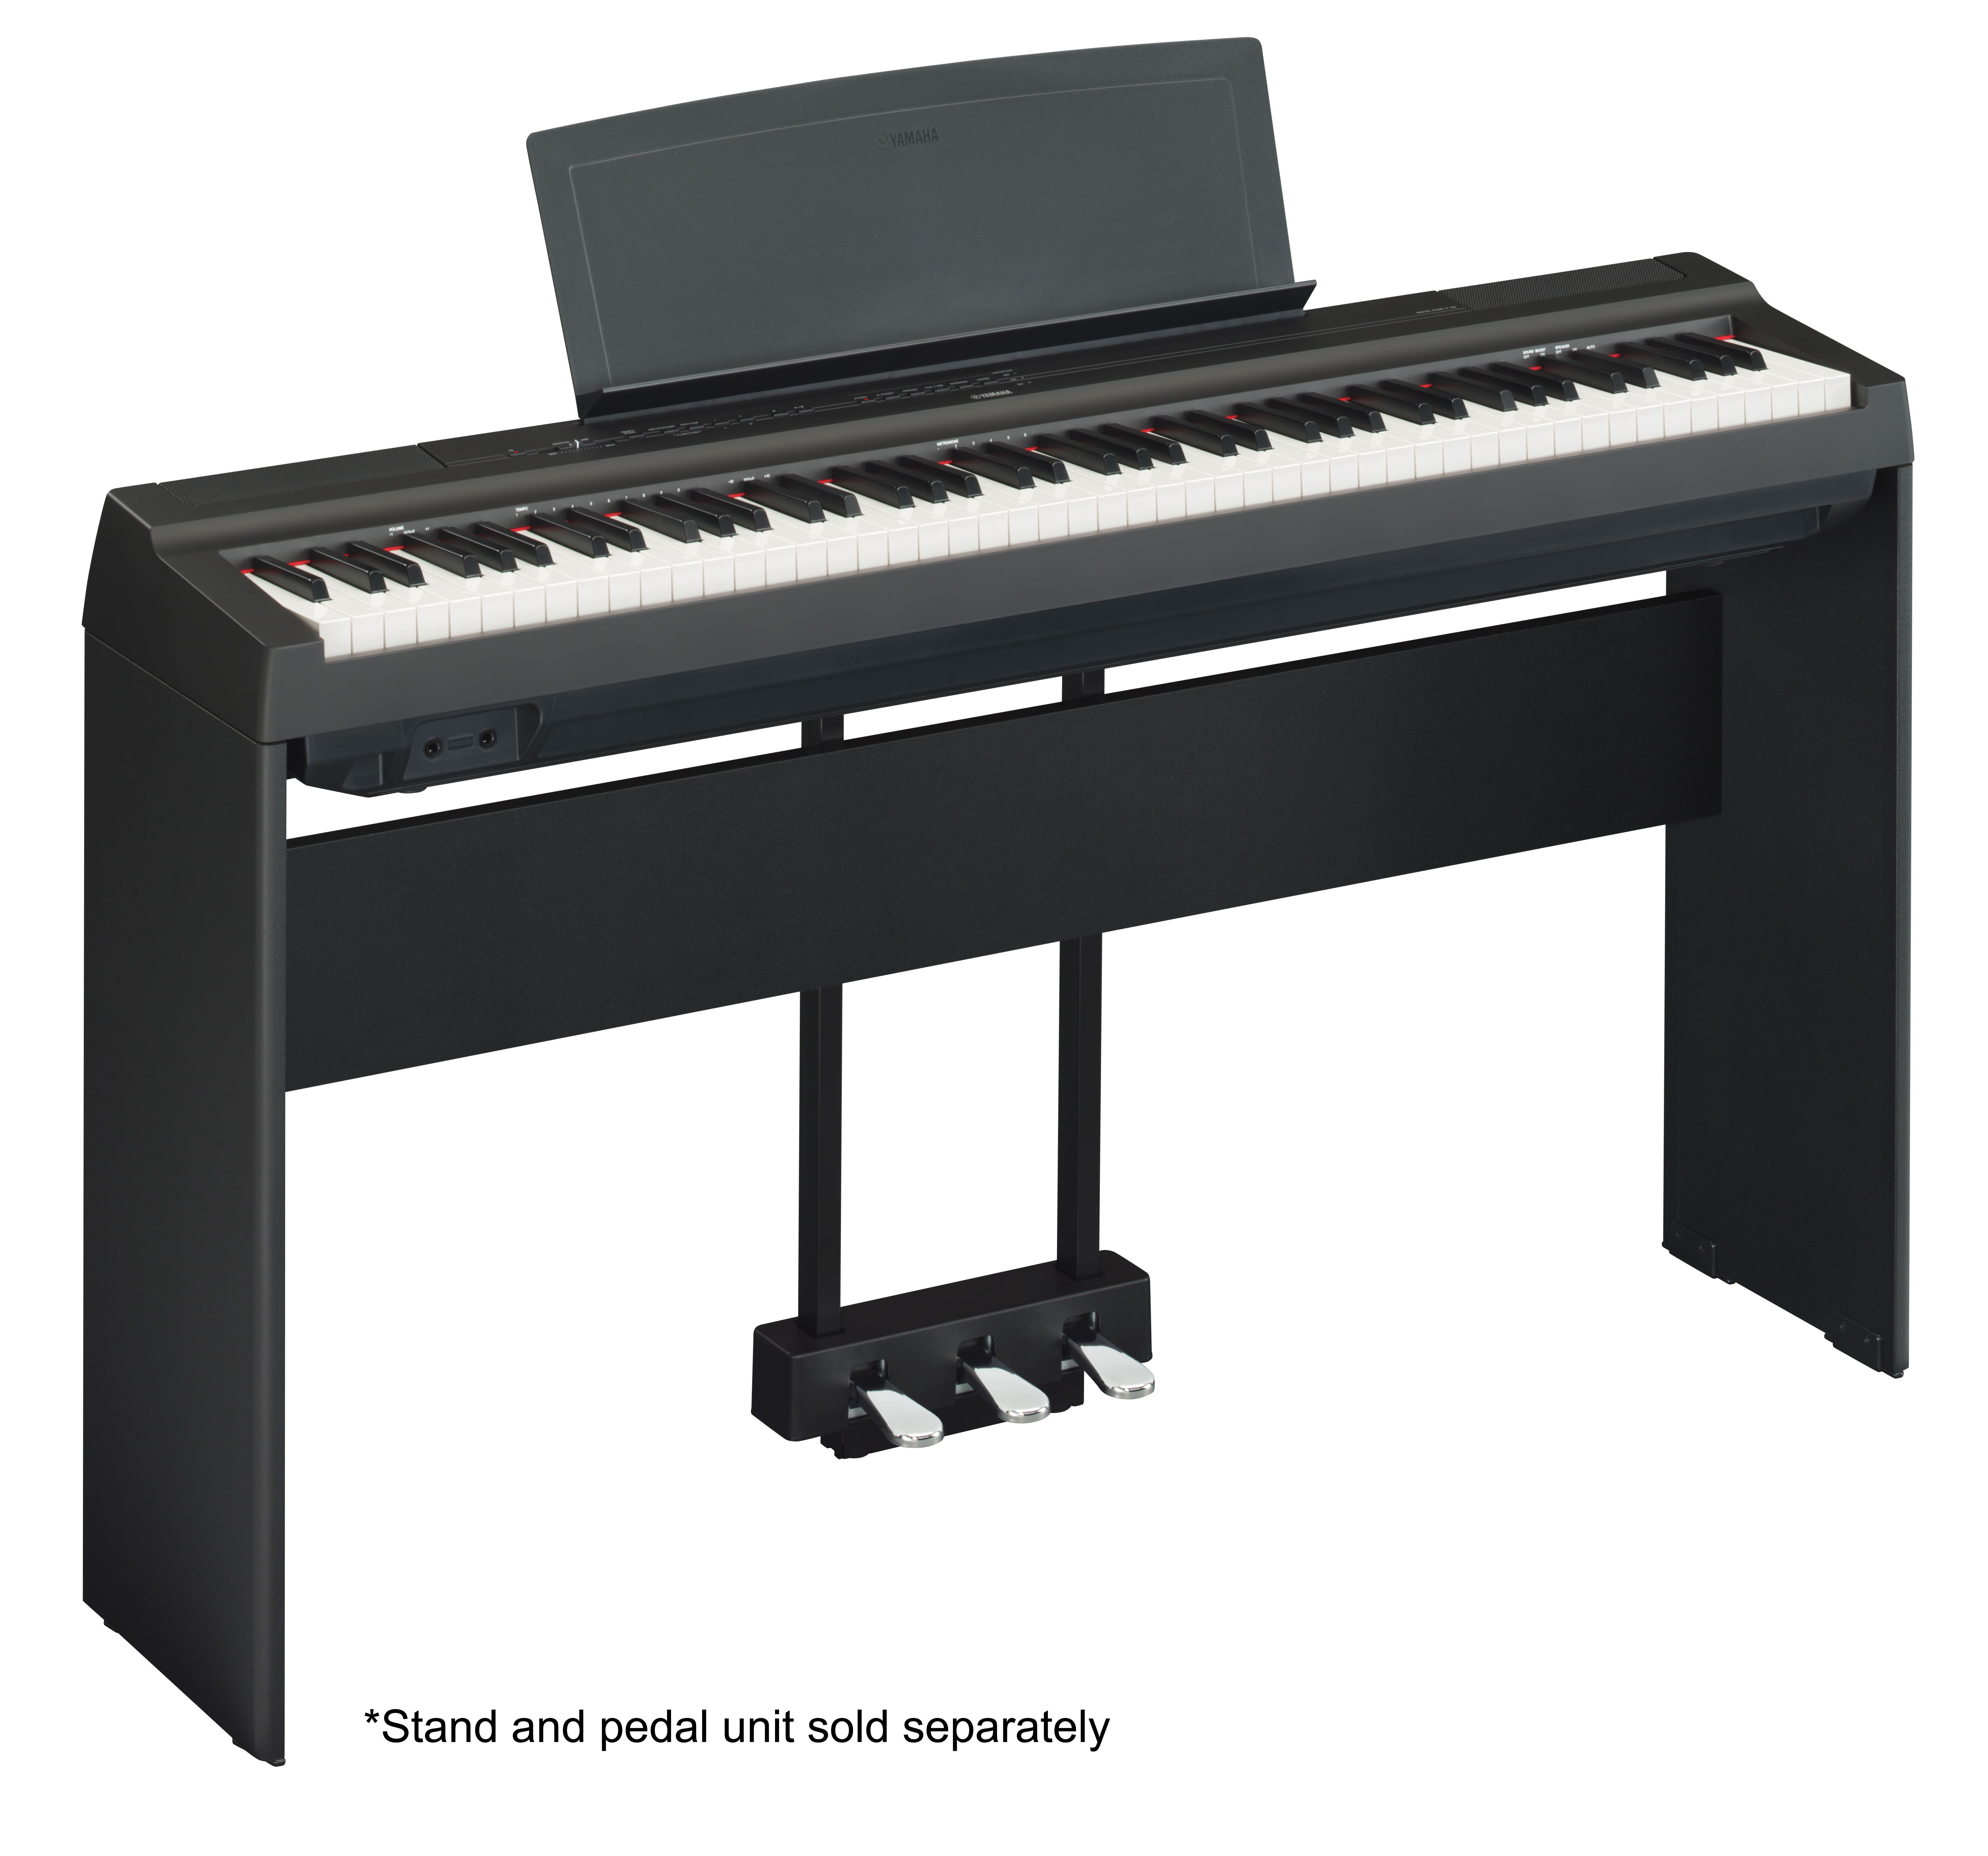 P-125 - Specs - Portables - Pianos - Musical Instruments